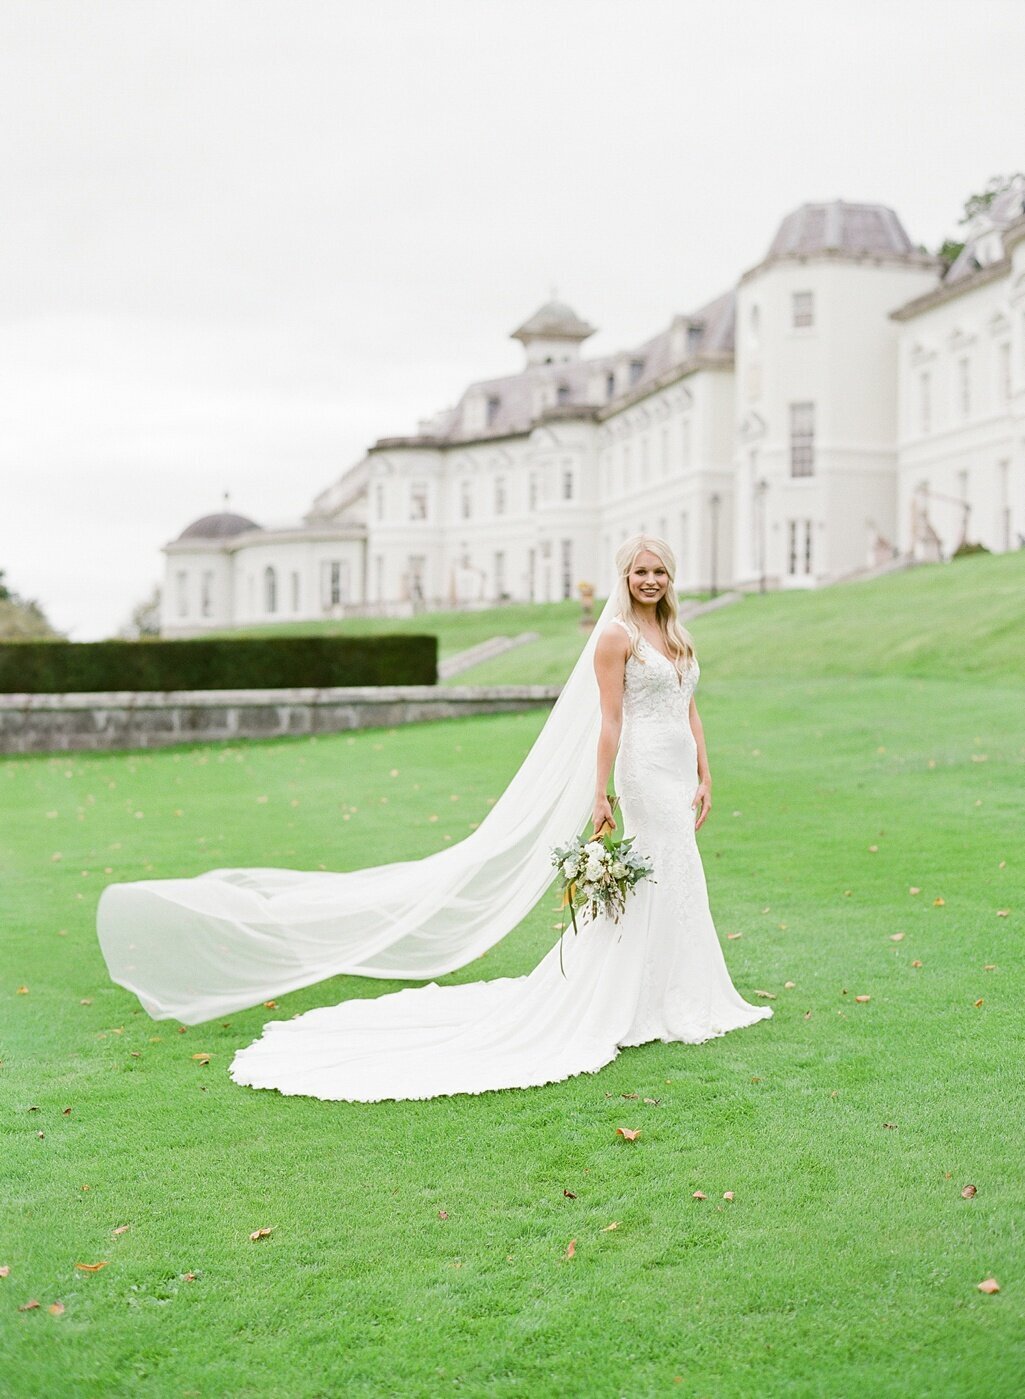 Jessie-Barksdale-Photography_K-Club-Ireland-Destination-Wedding-Photographer_0001